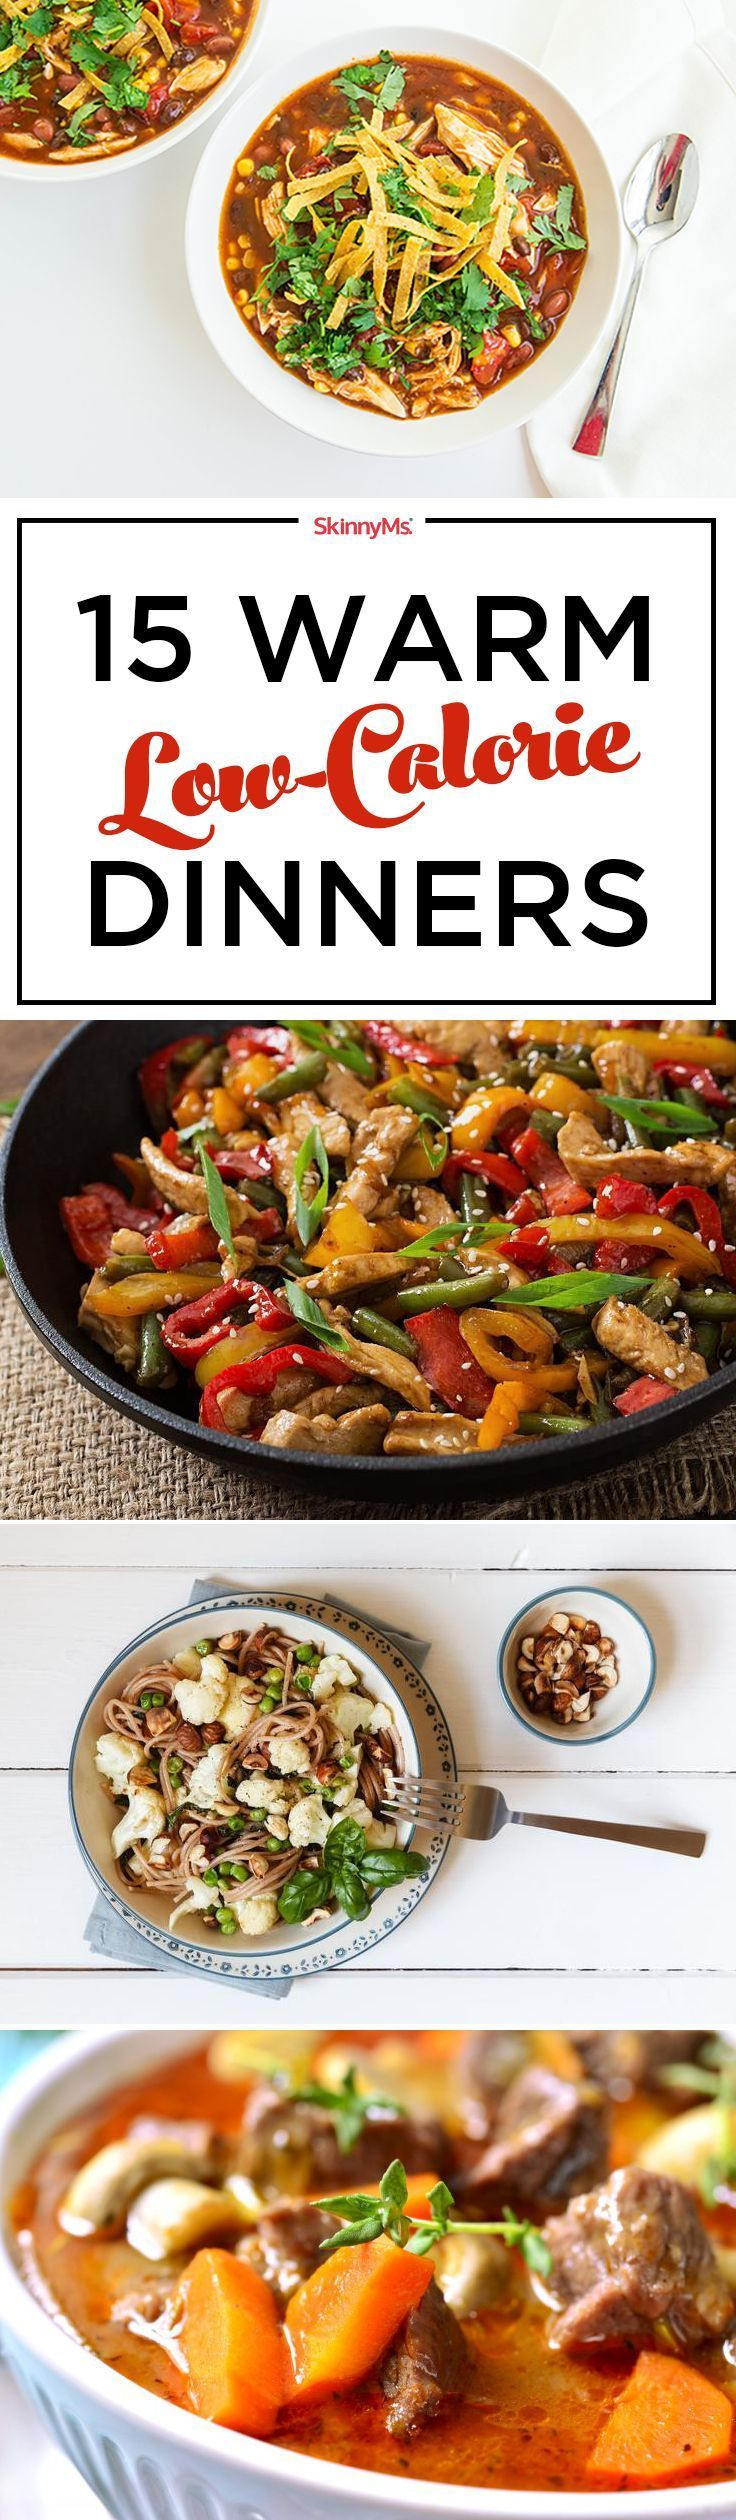 Best Low Calorie Dinners
 1240 best images about Low Calorie Options on Pinterest